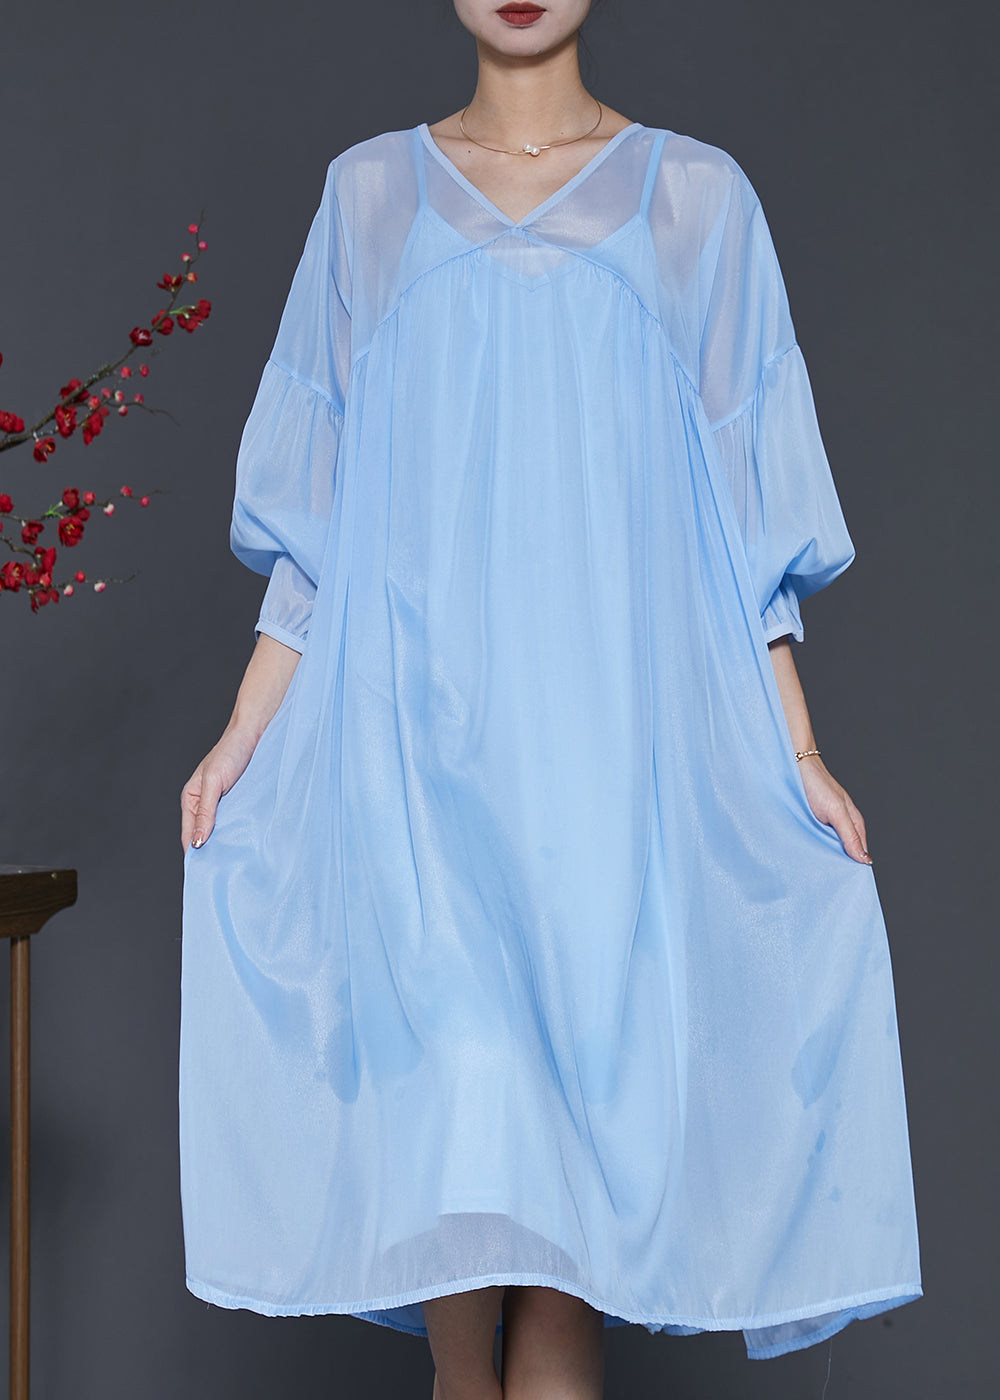 Bohemian Lake Blue Draping Chiffon Dress Two Piece Set Lantern Sleeve